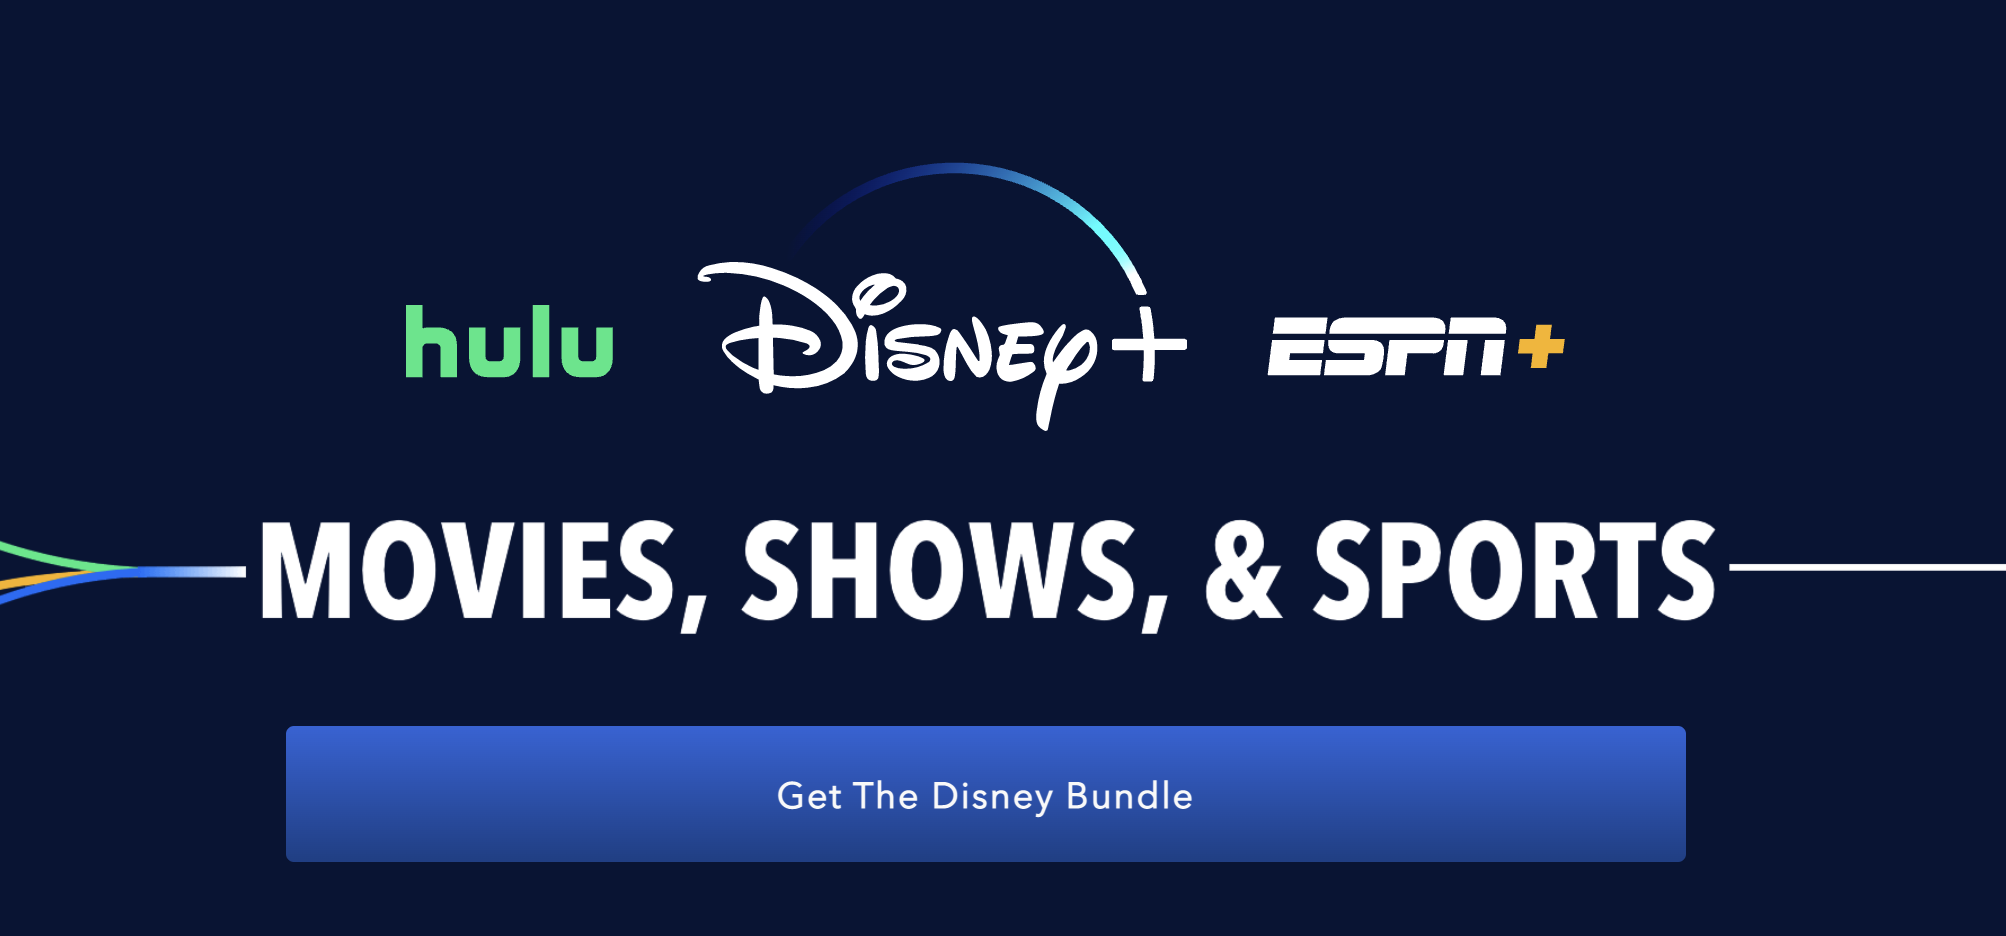 Disney Bundle offer How to get Disney Plus, Hulu, ESPN Plus for just $13.99